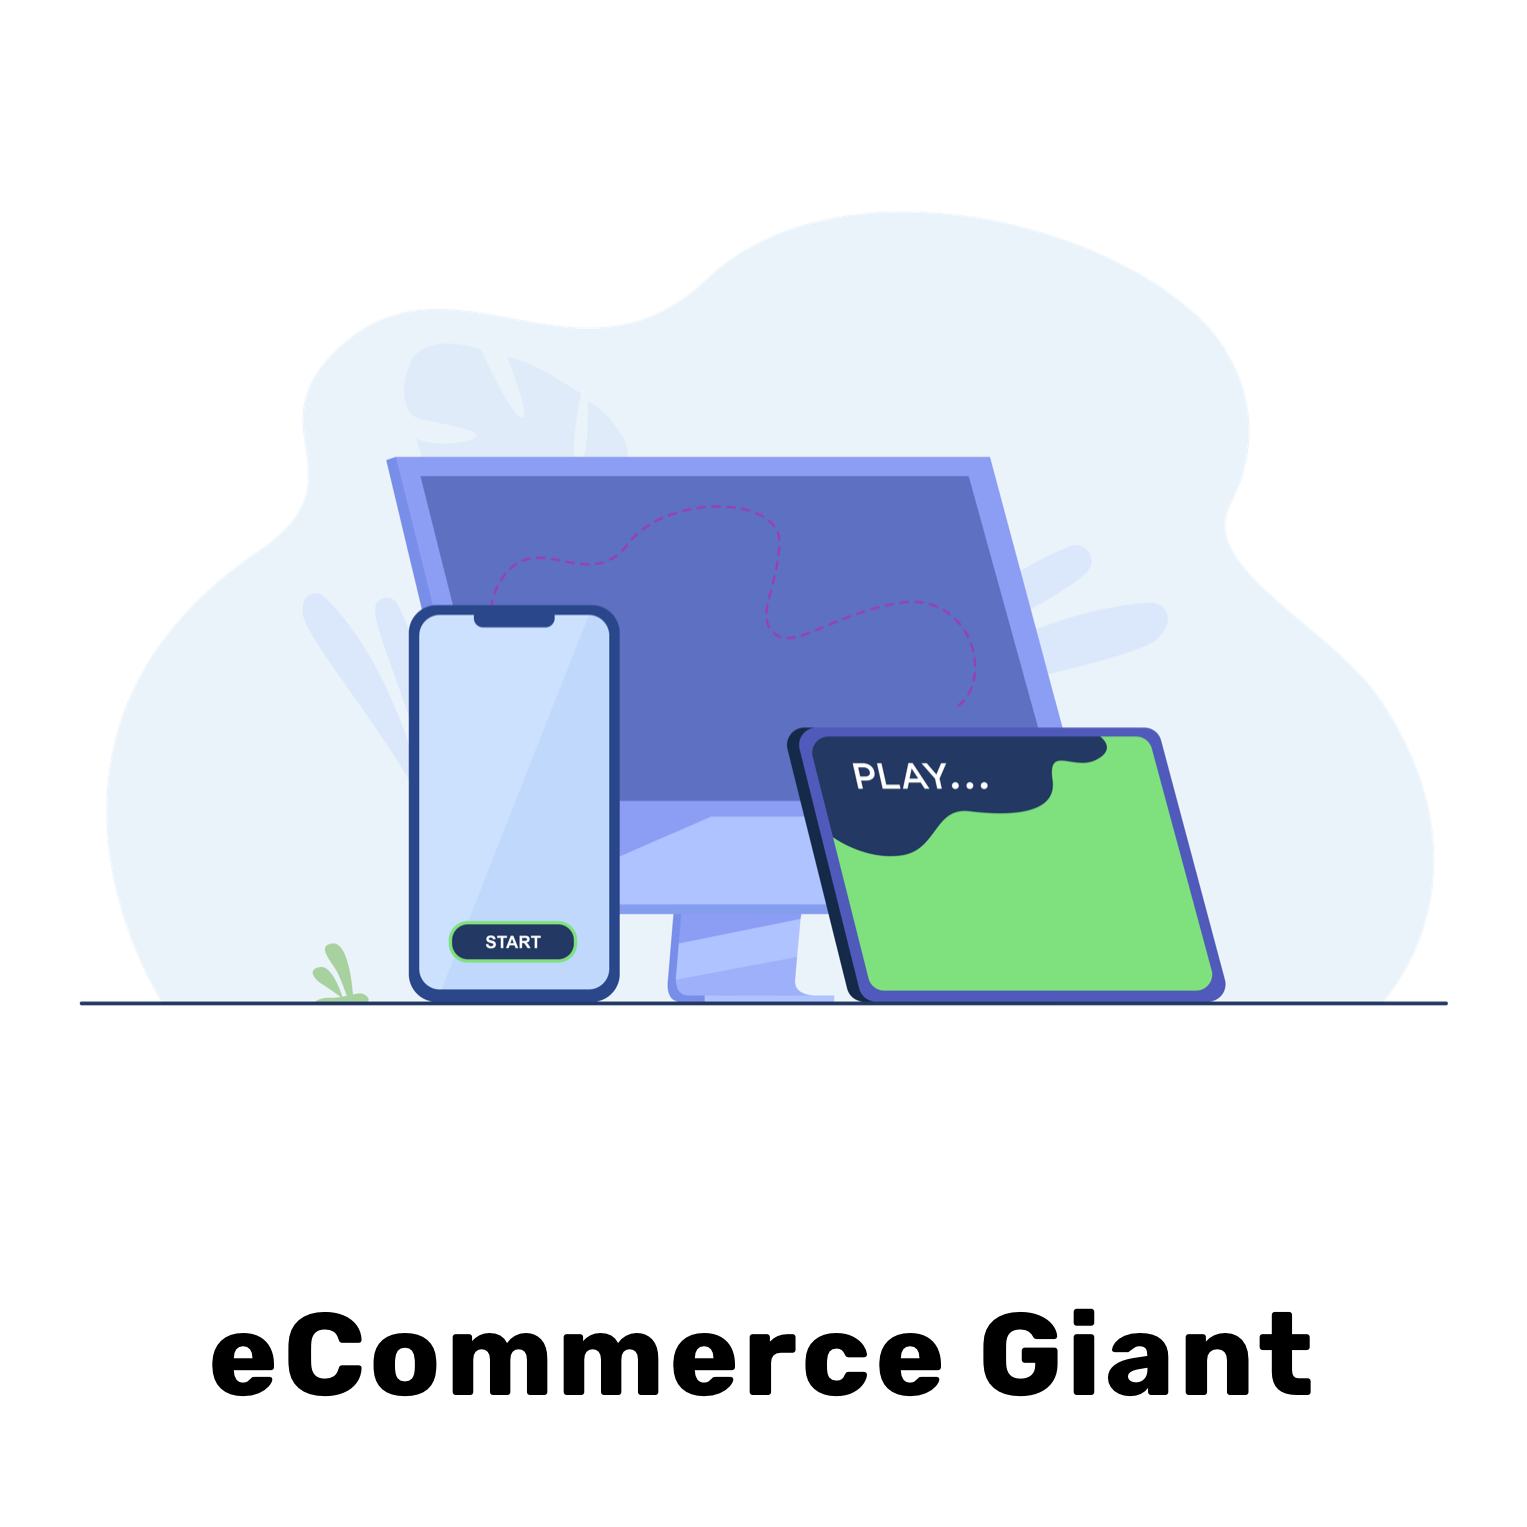 eCommerce Giant